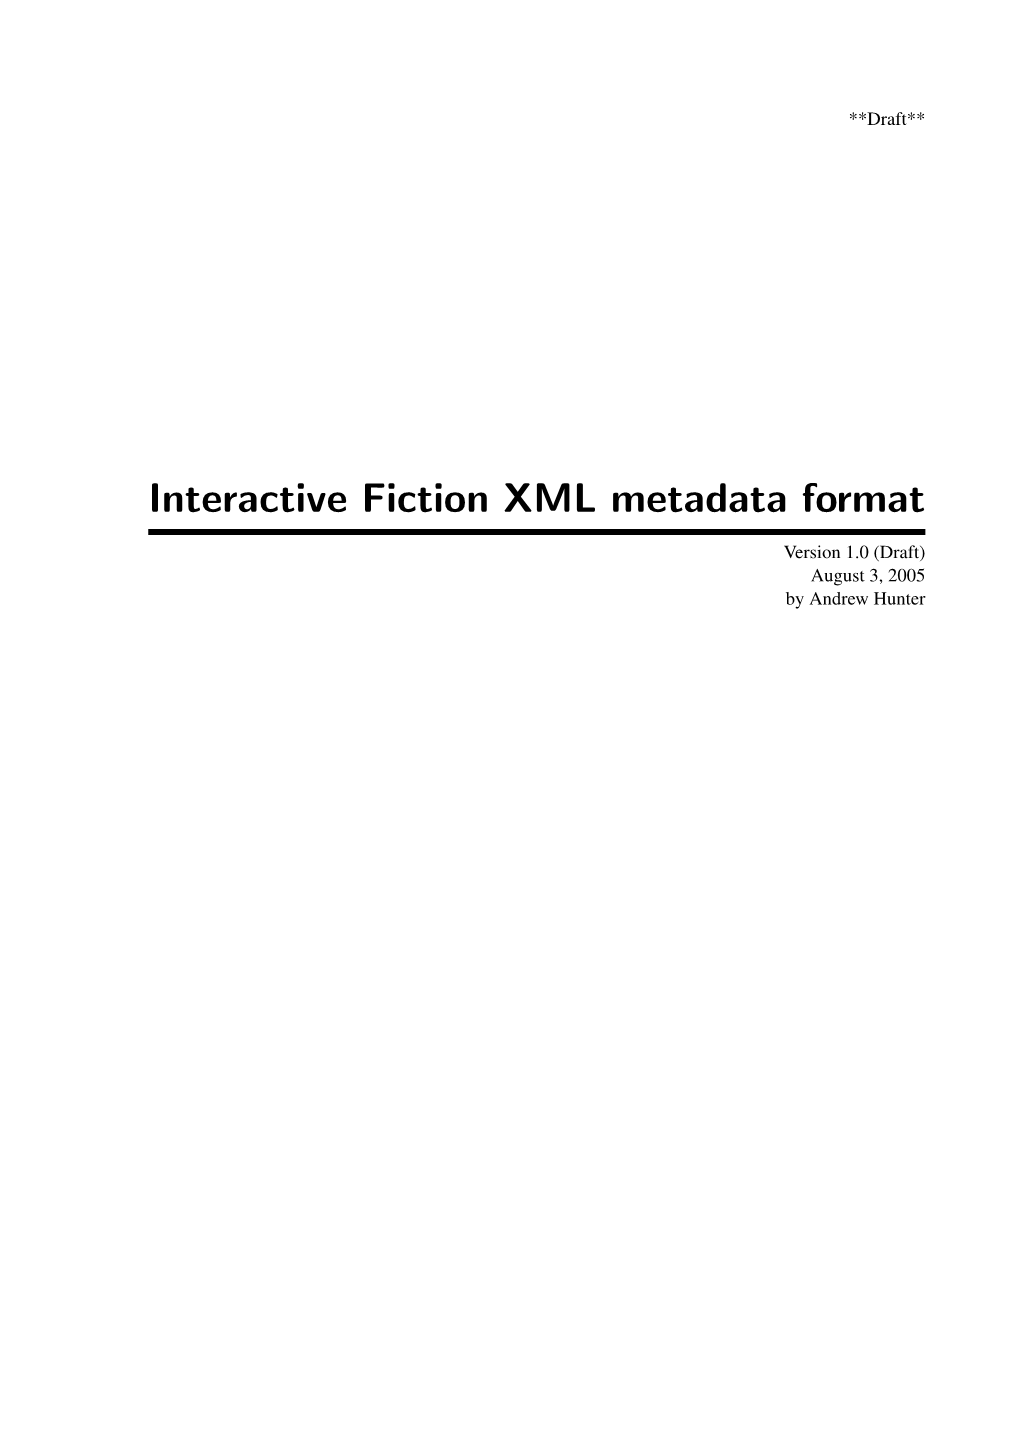 IF XML Metadata Format